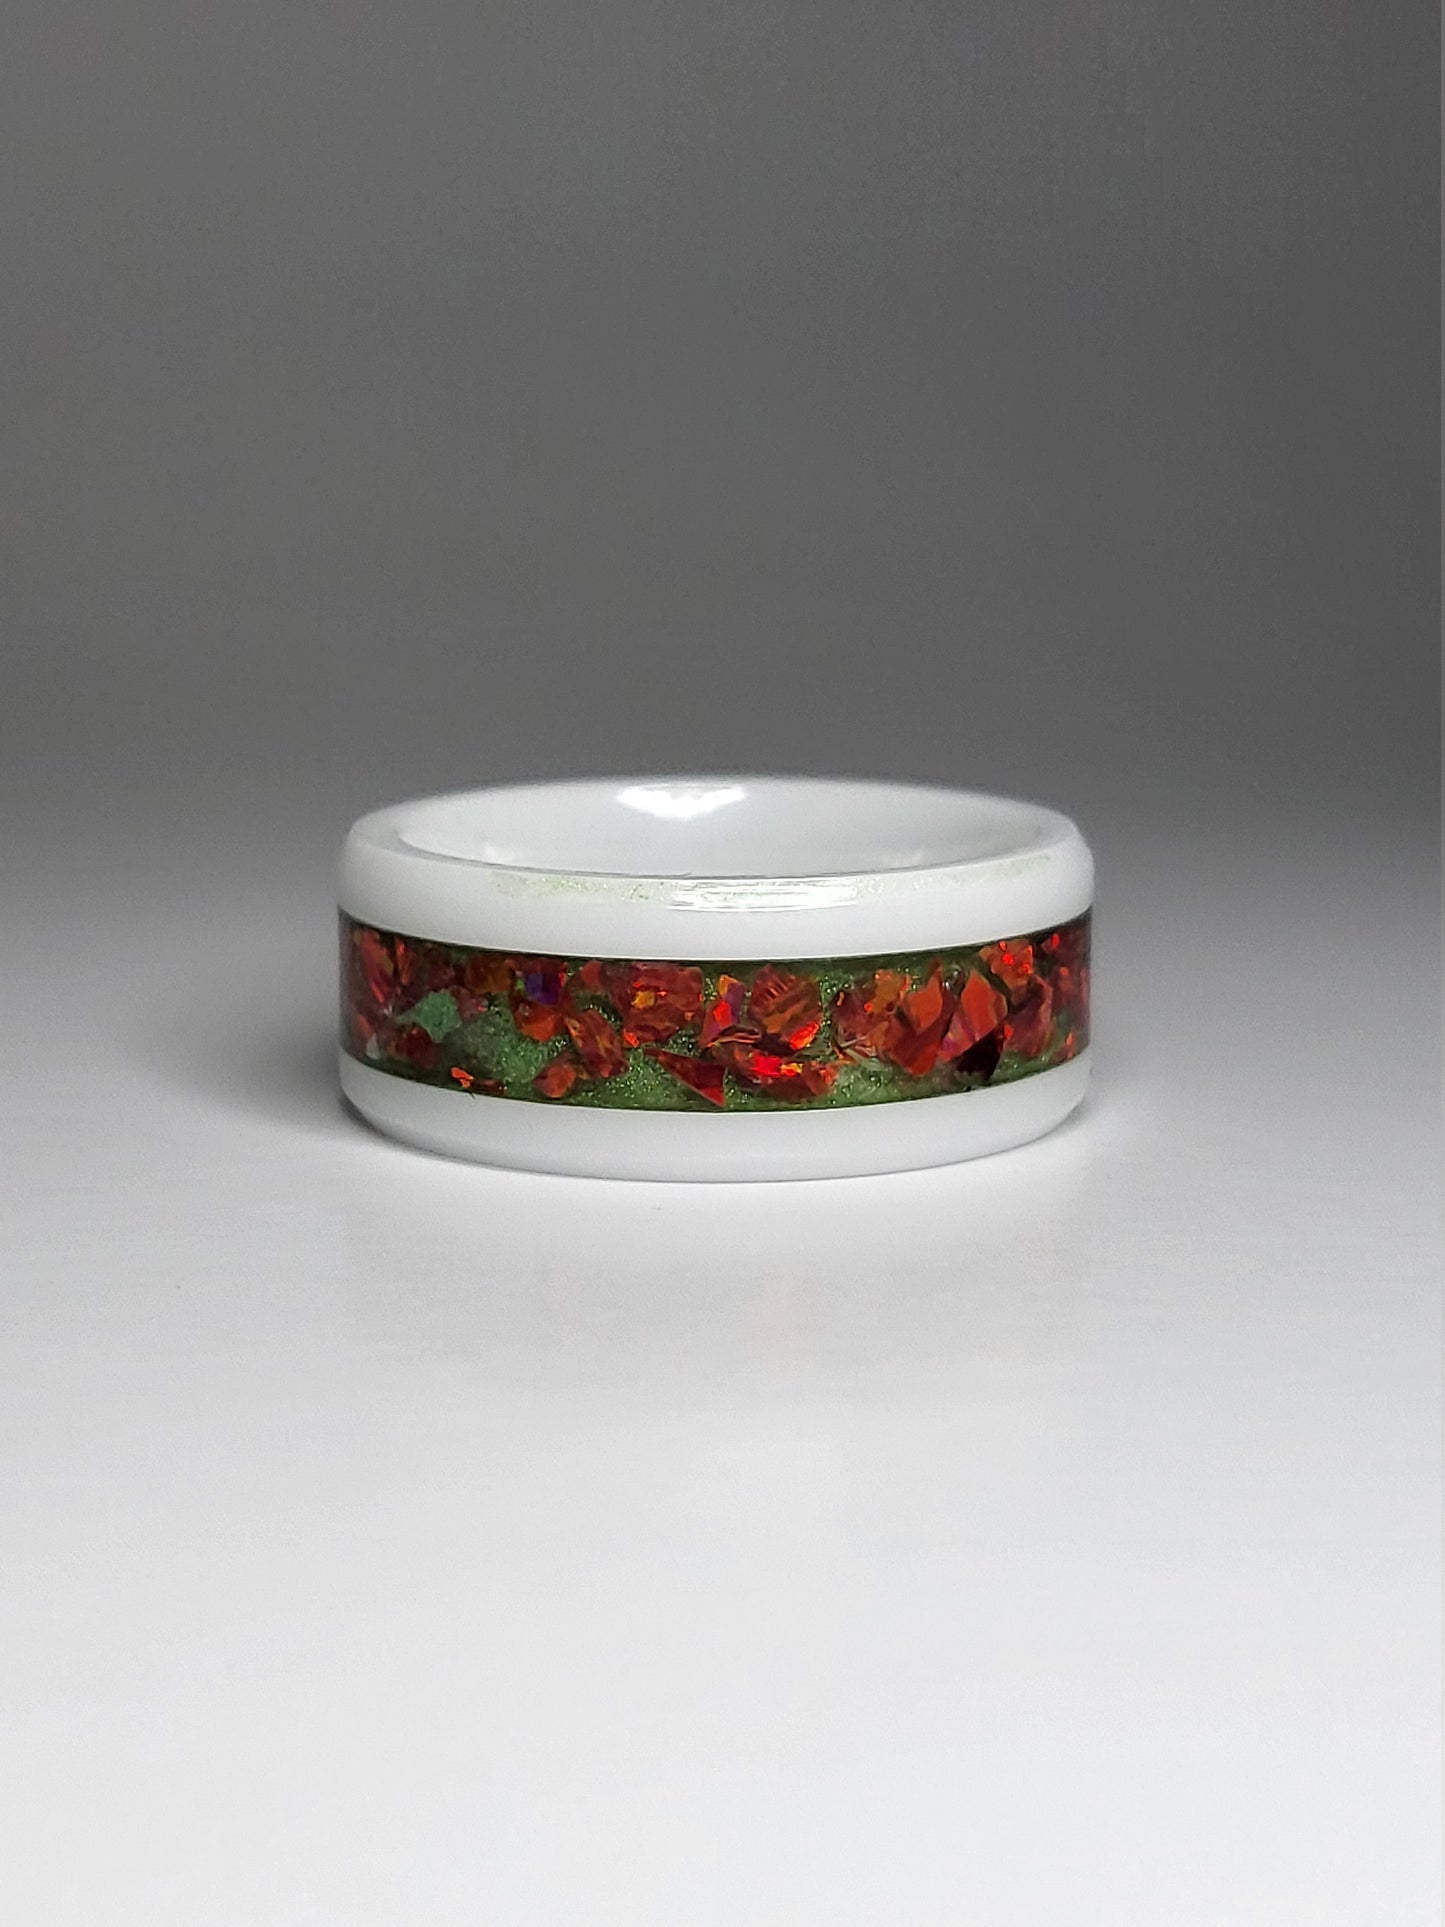 White Ceramic Ring Crimson Fire Opal UV Glow 6.5